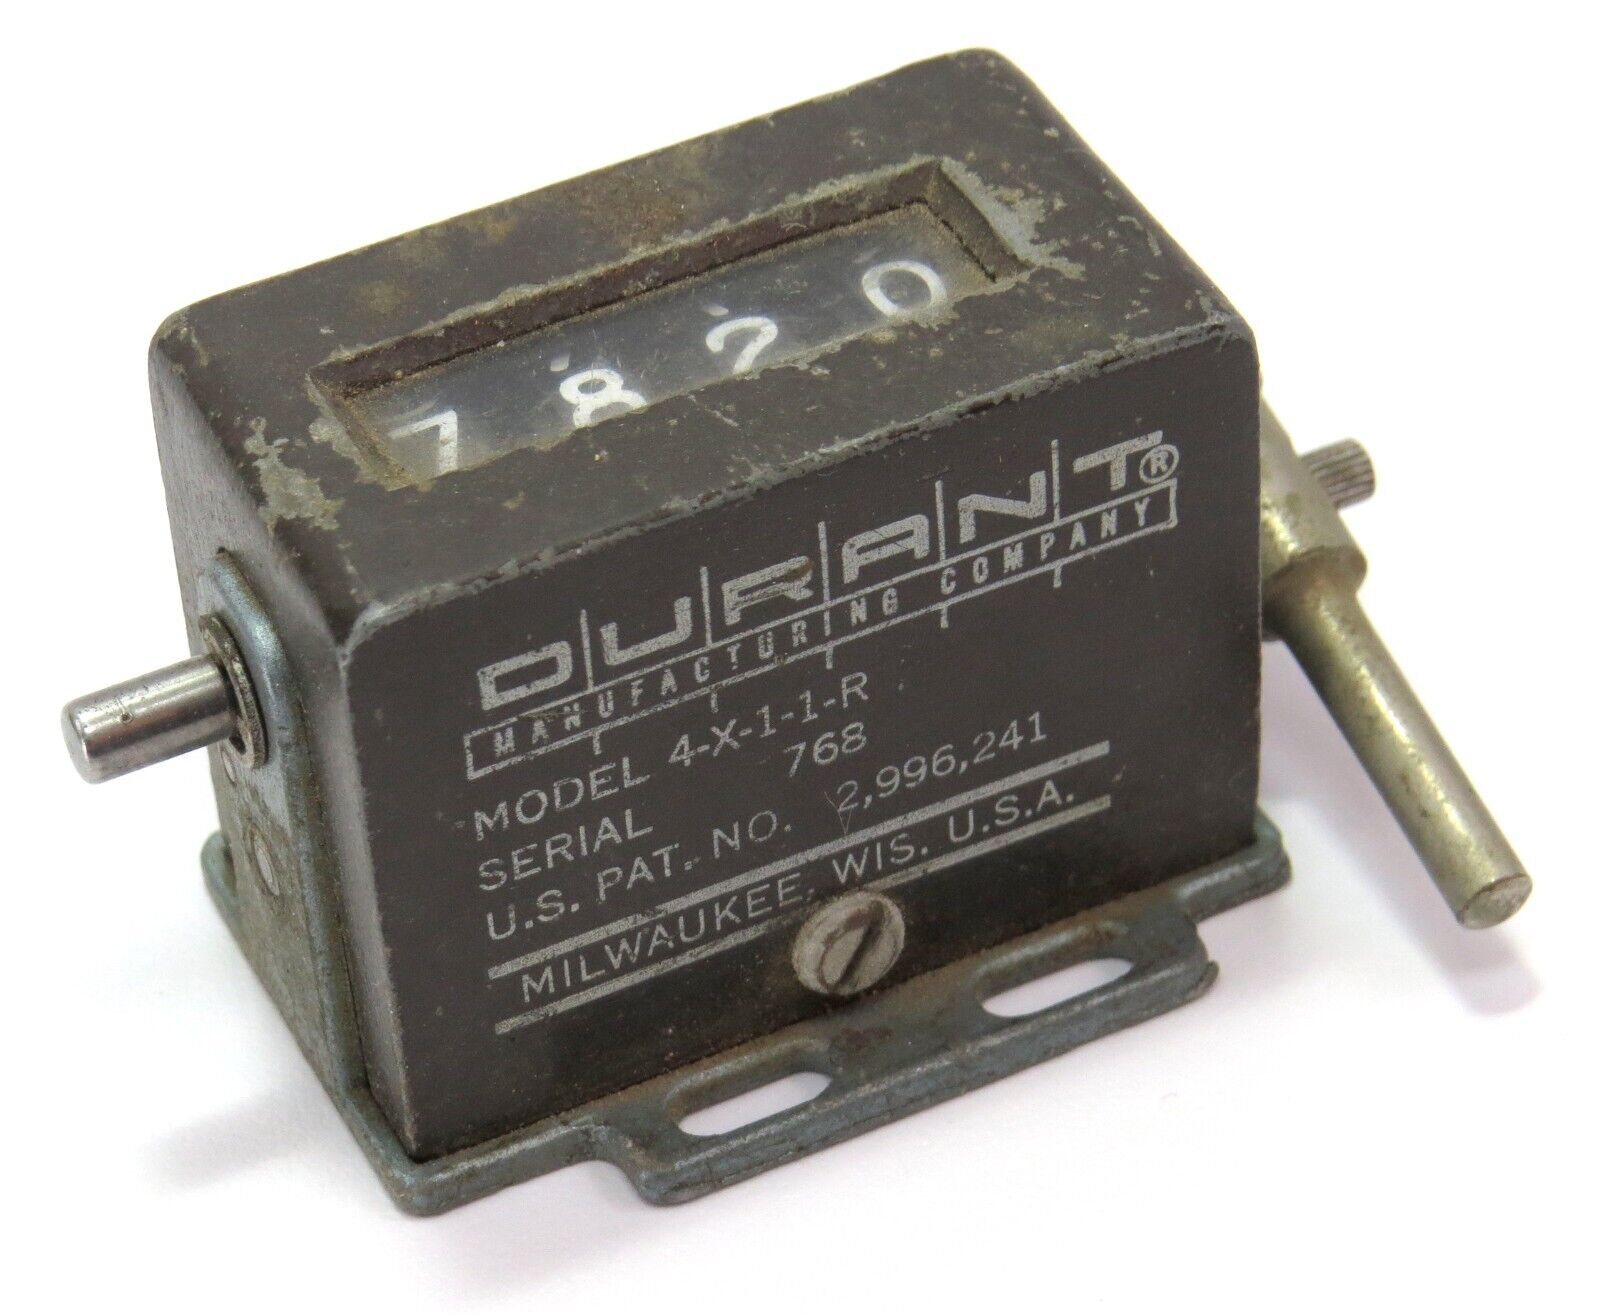 Durant Mfg. Co. Model 4-X-1-1-R Vintage 4-Digit Mechanical Counter Unit